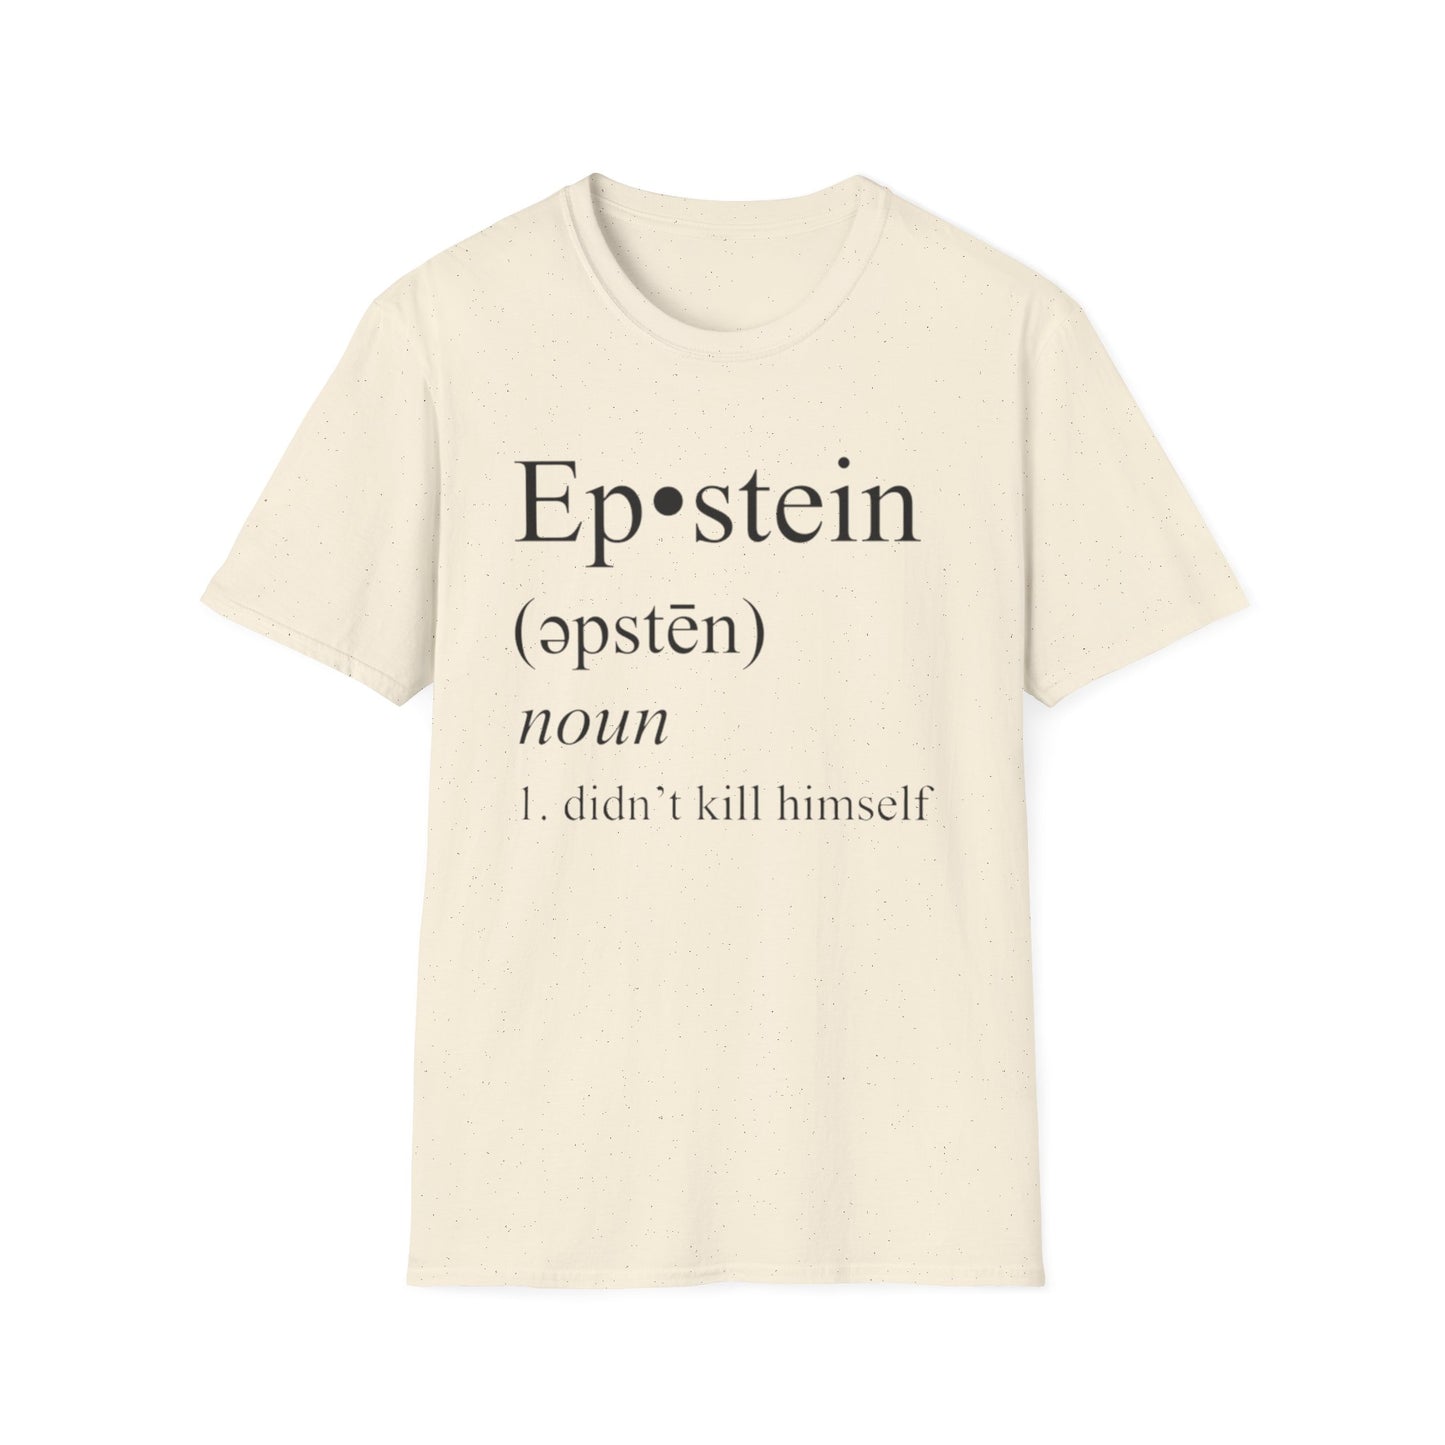 Epstein Didn't Kill Himself - Unisex Softstyle T-Shirt